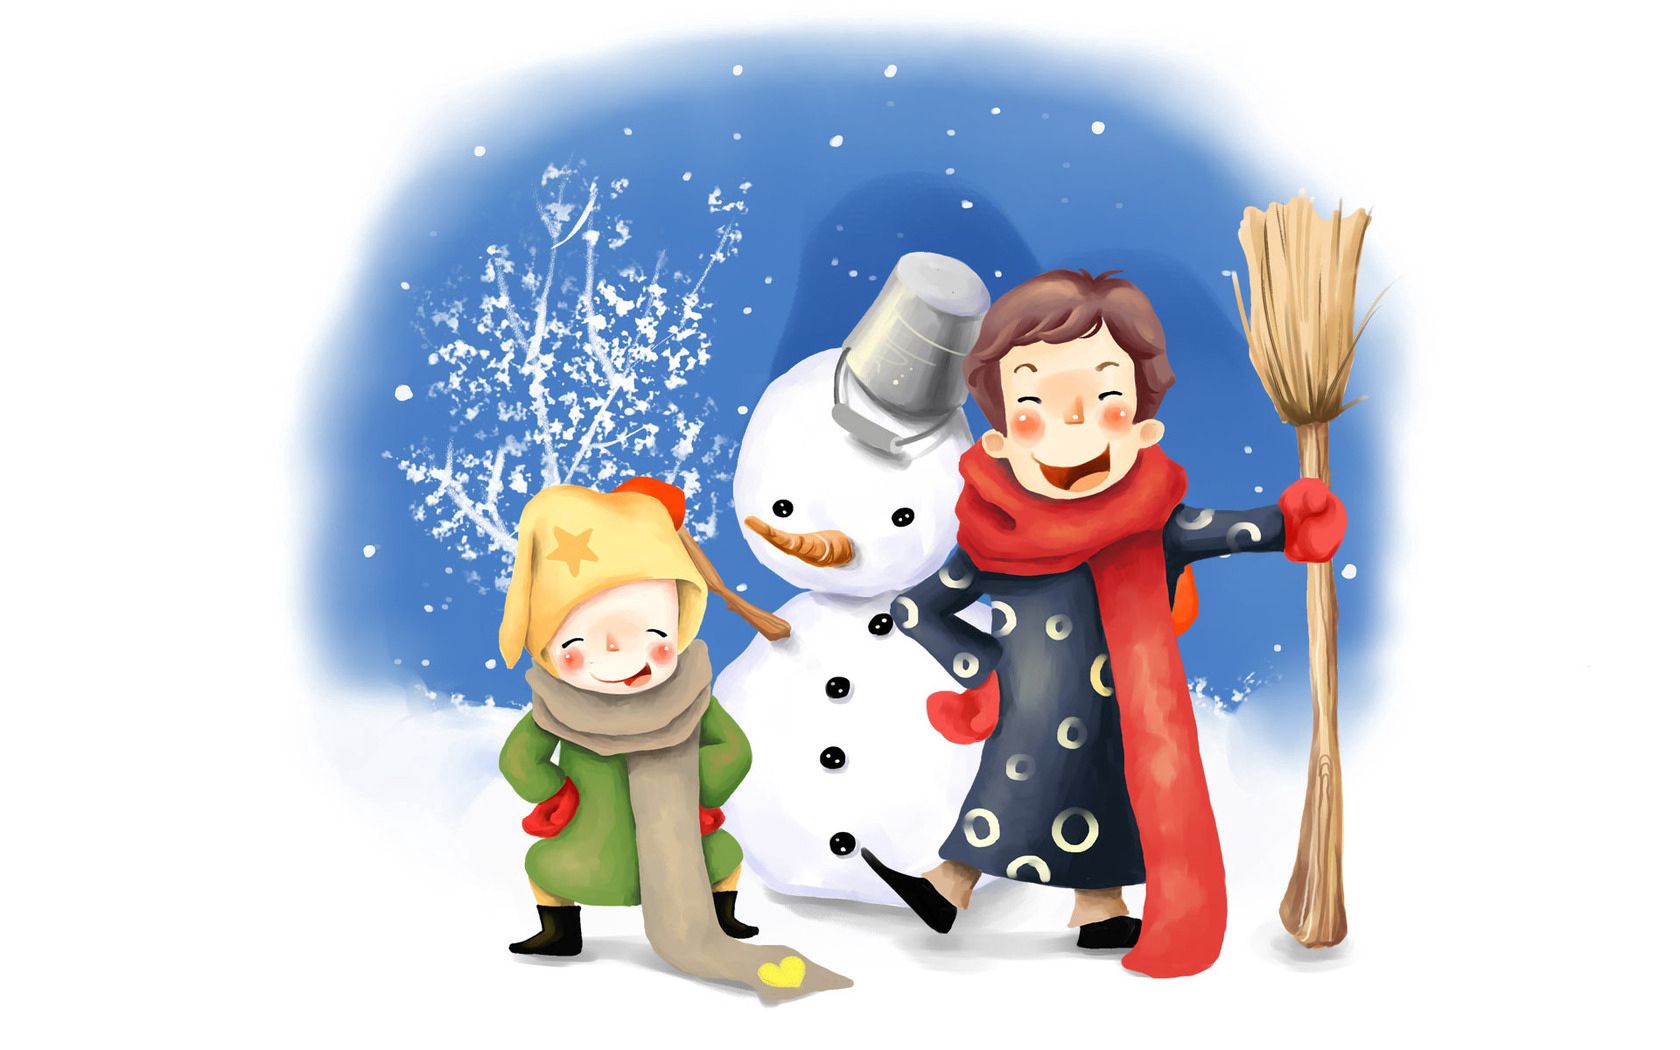 children, winter, snowman, miscellanea, miscellaneous, picture, drawing, buttons, fun, merriment, bucket, scarves, broom images